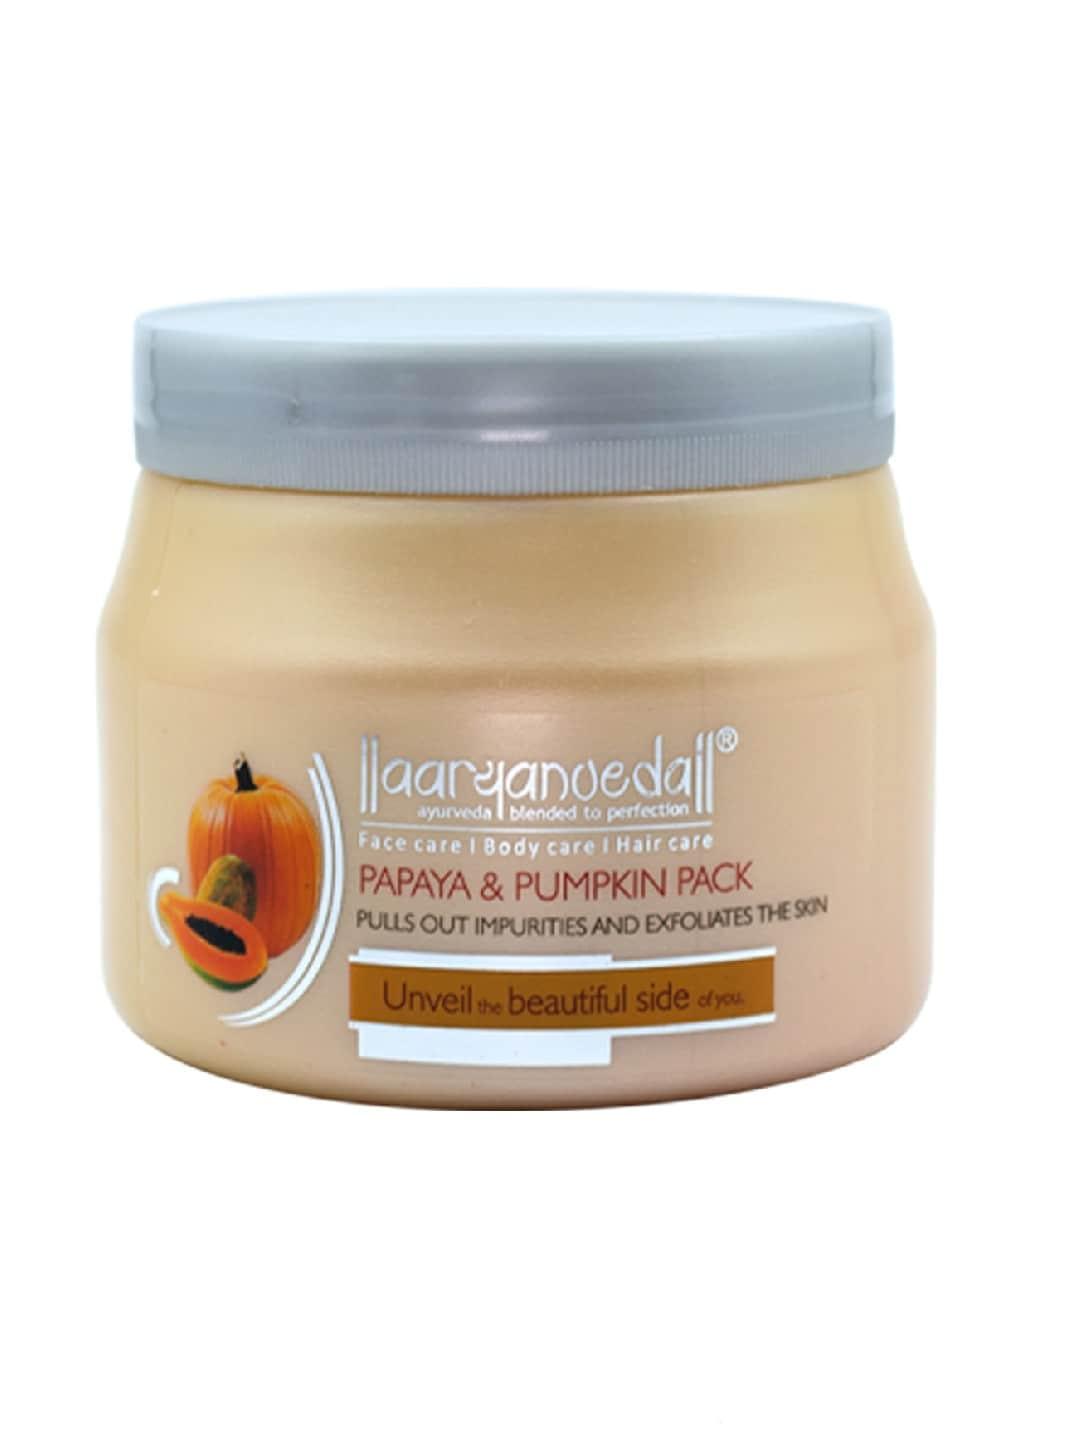 aryanveda papaya pumpkin face pack for deep purification & dead skin cells - 400 g